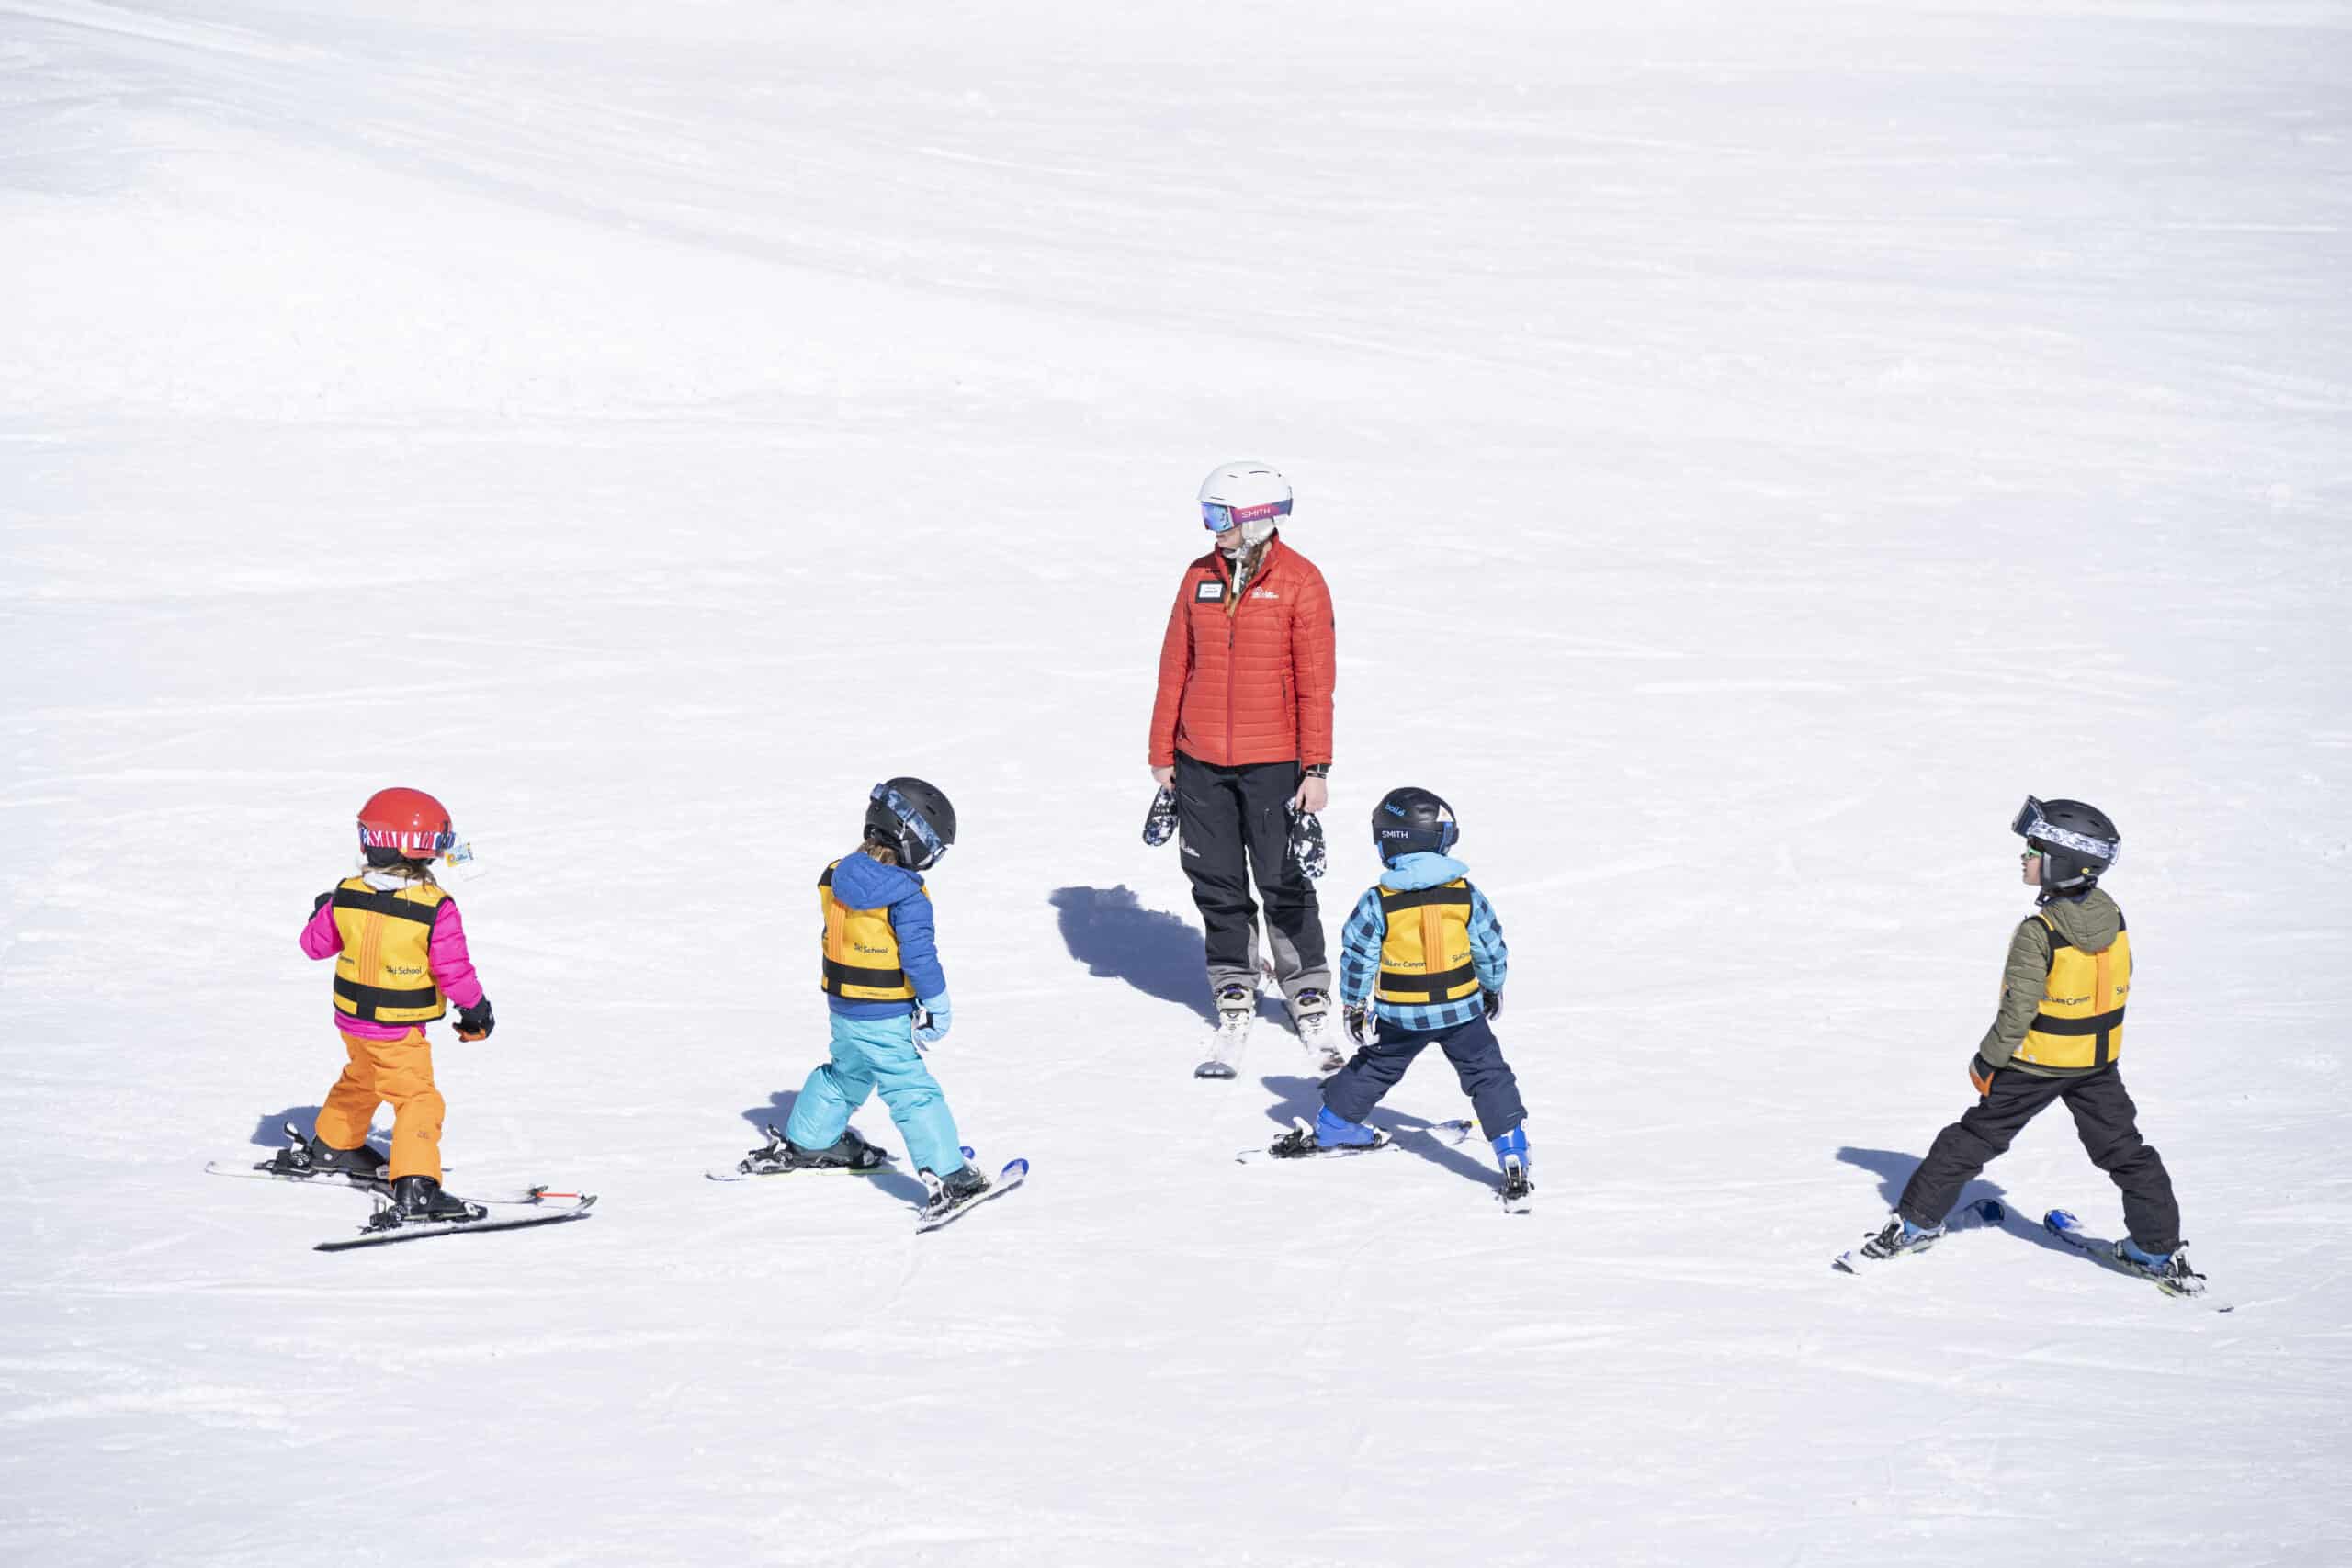 Ski school teaching kids